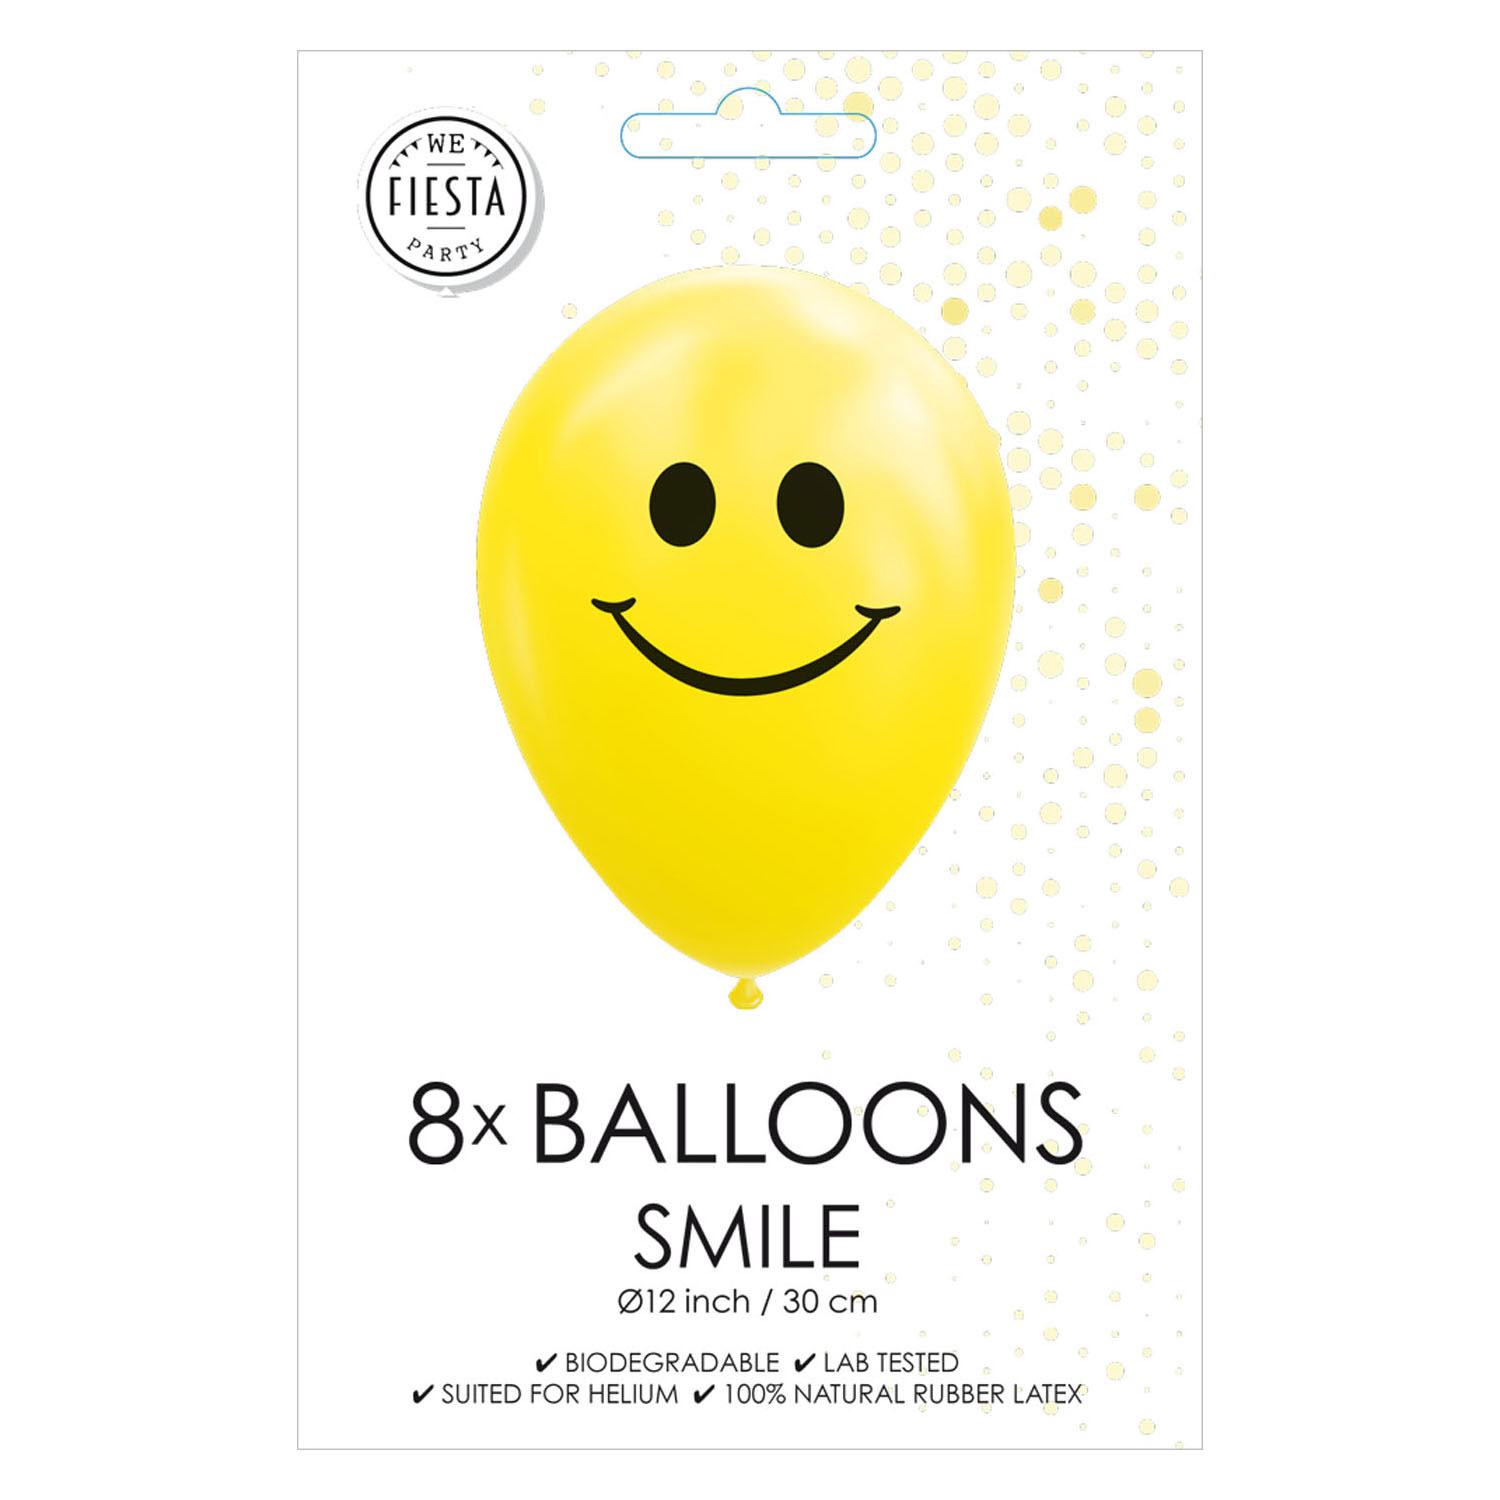 Luftballons Smile Gelb 30cm, 8St.